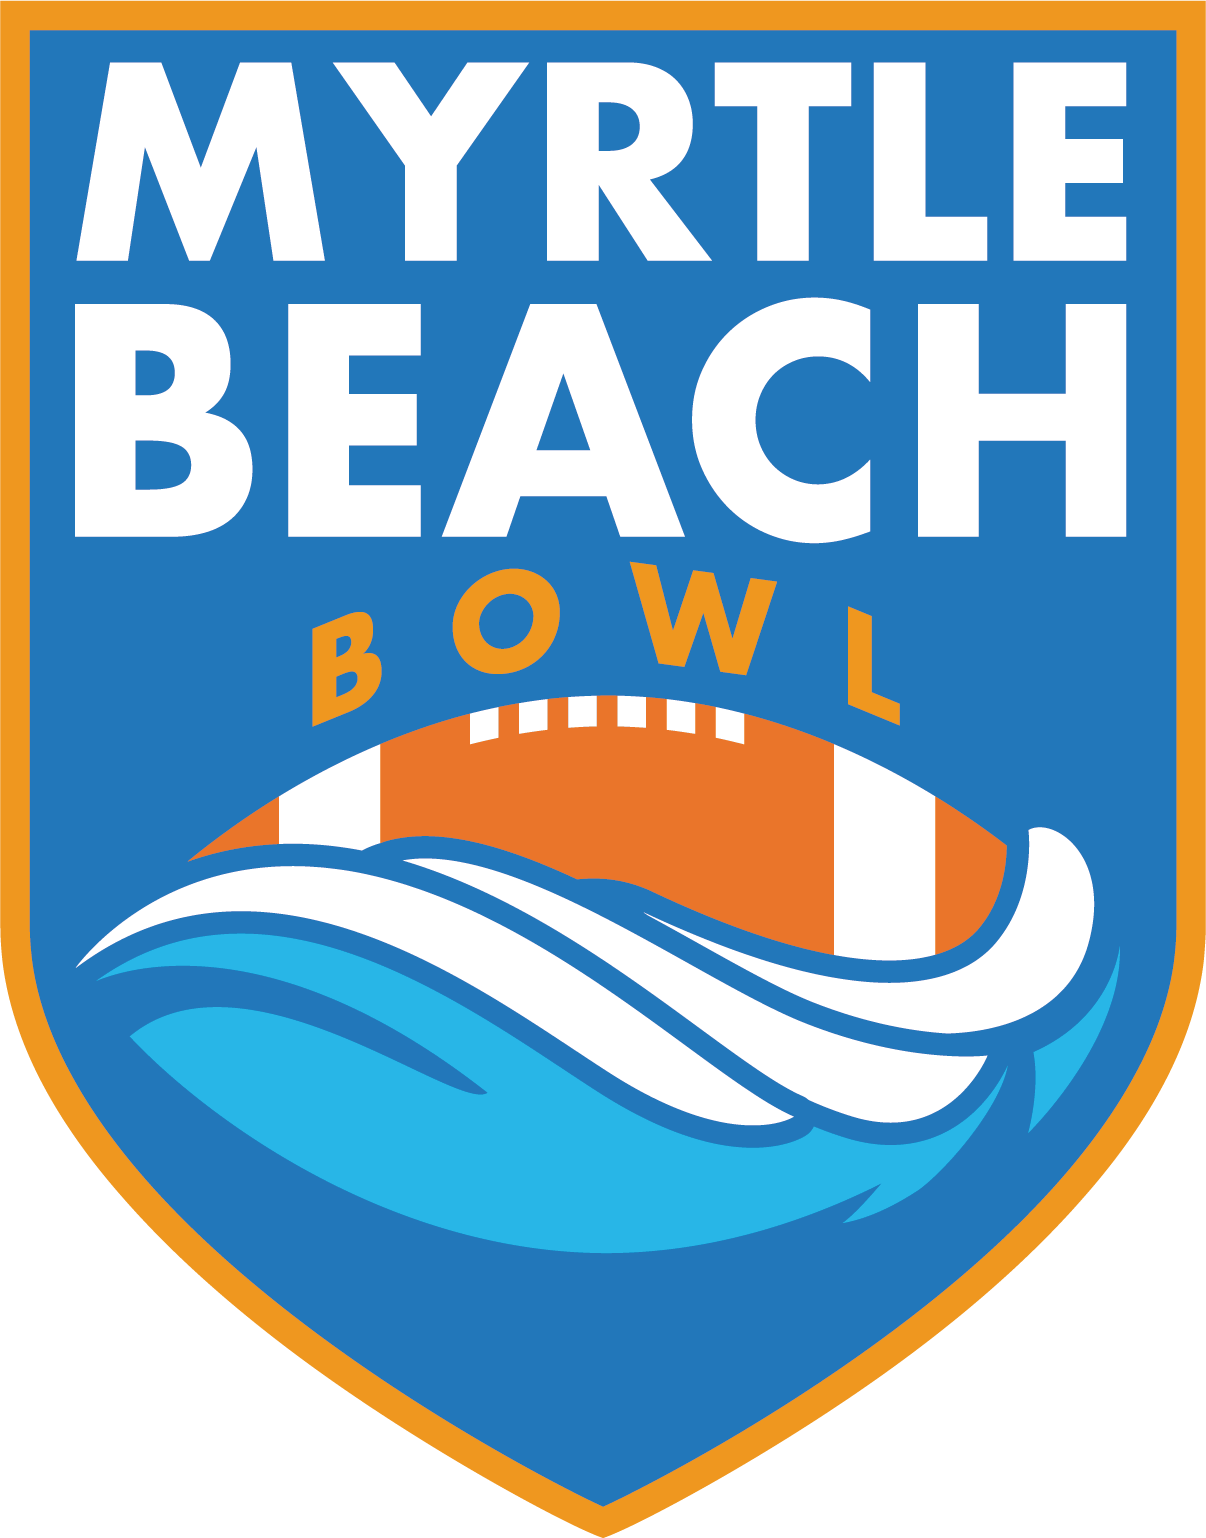 myrtle beach bowl game logo